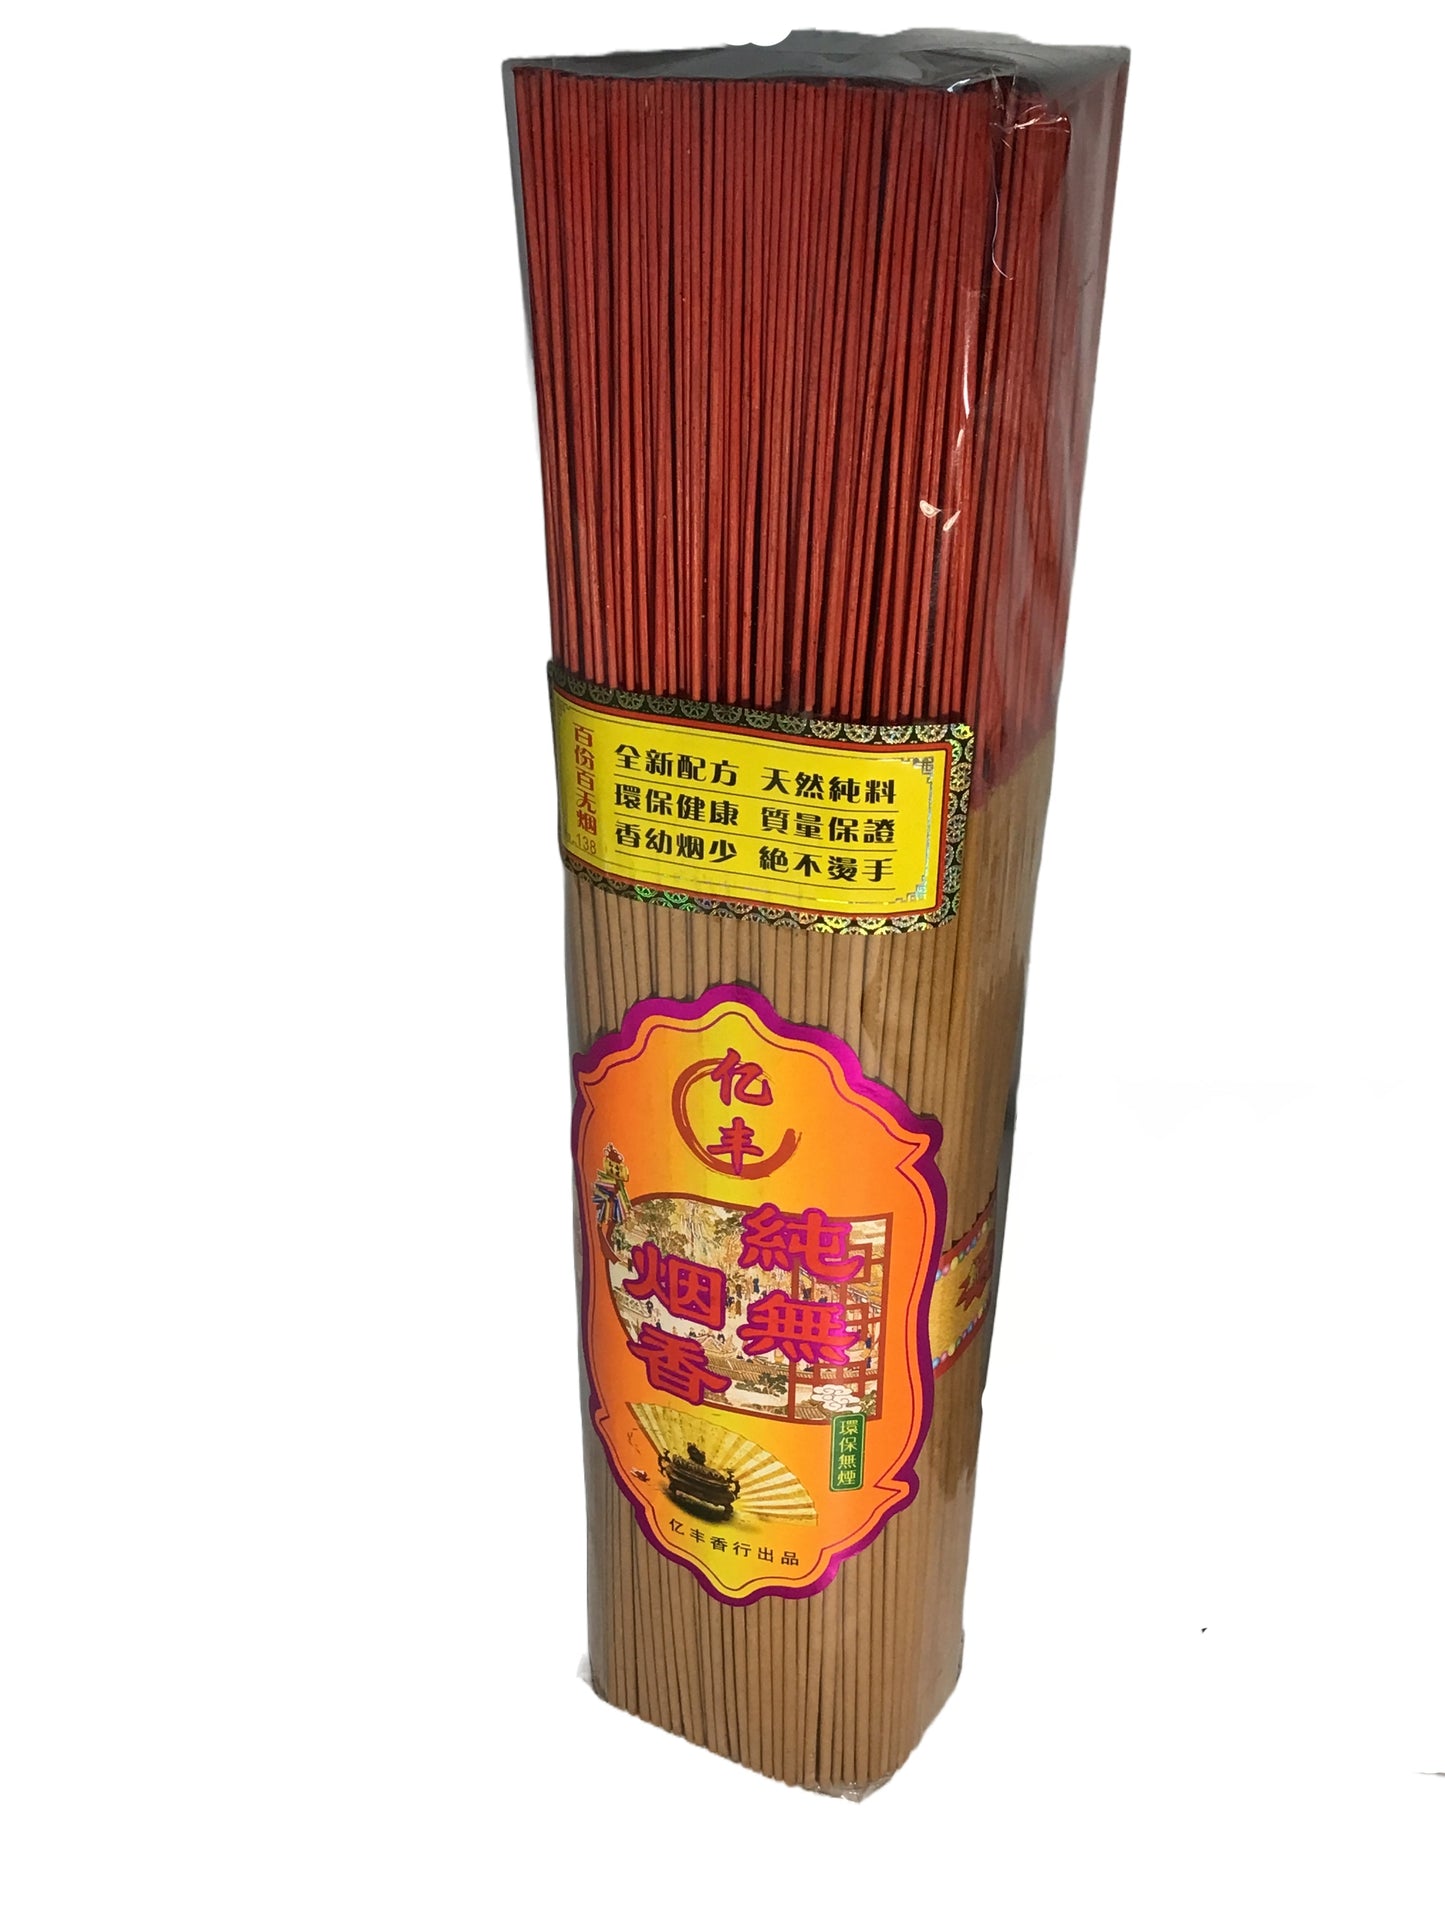 33cm Long Incense Sticks - About 800 Sticks 亿丰 纯无烟香